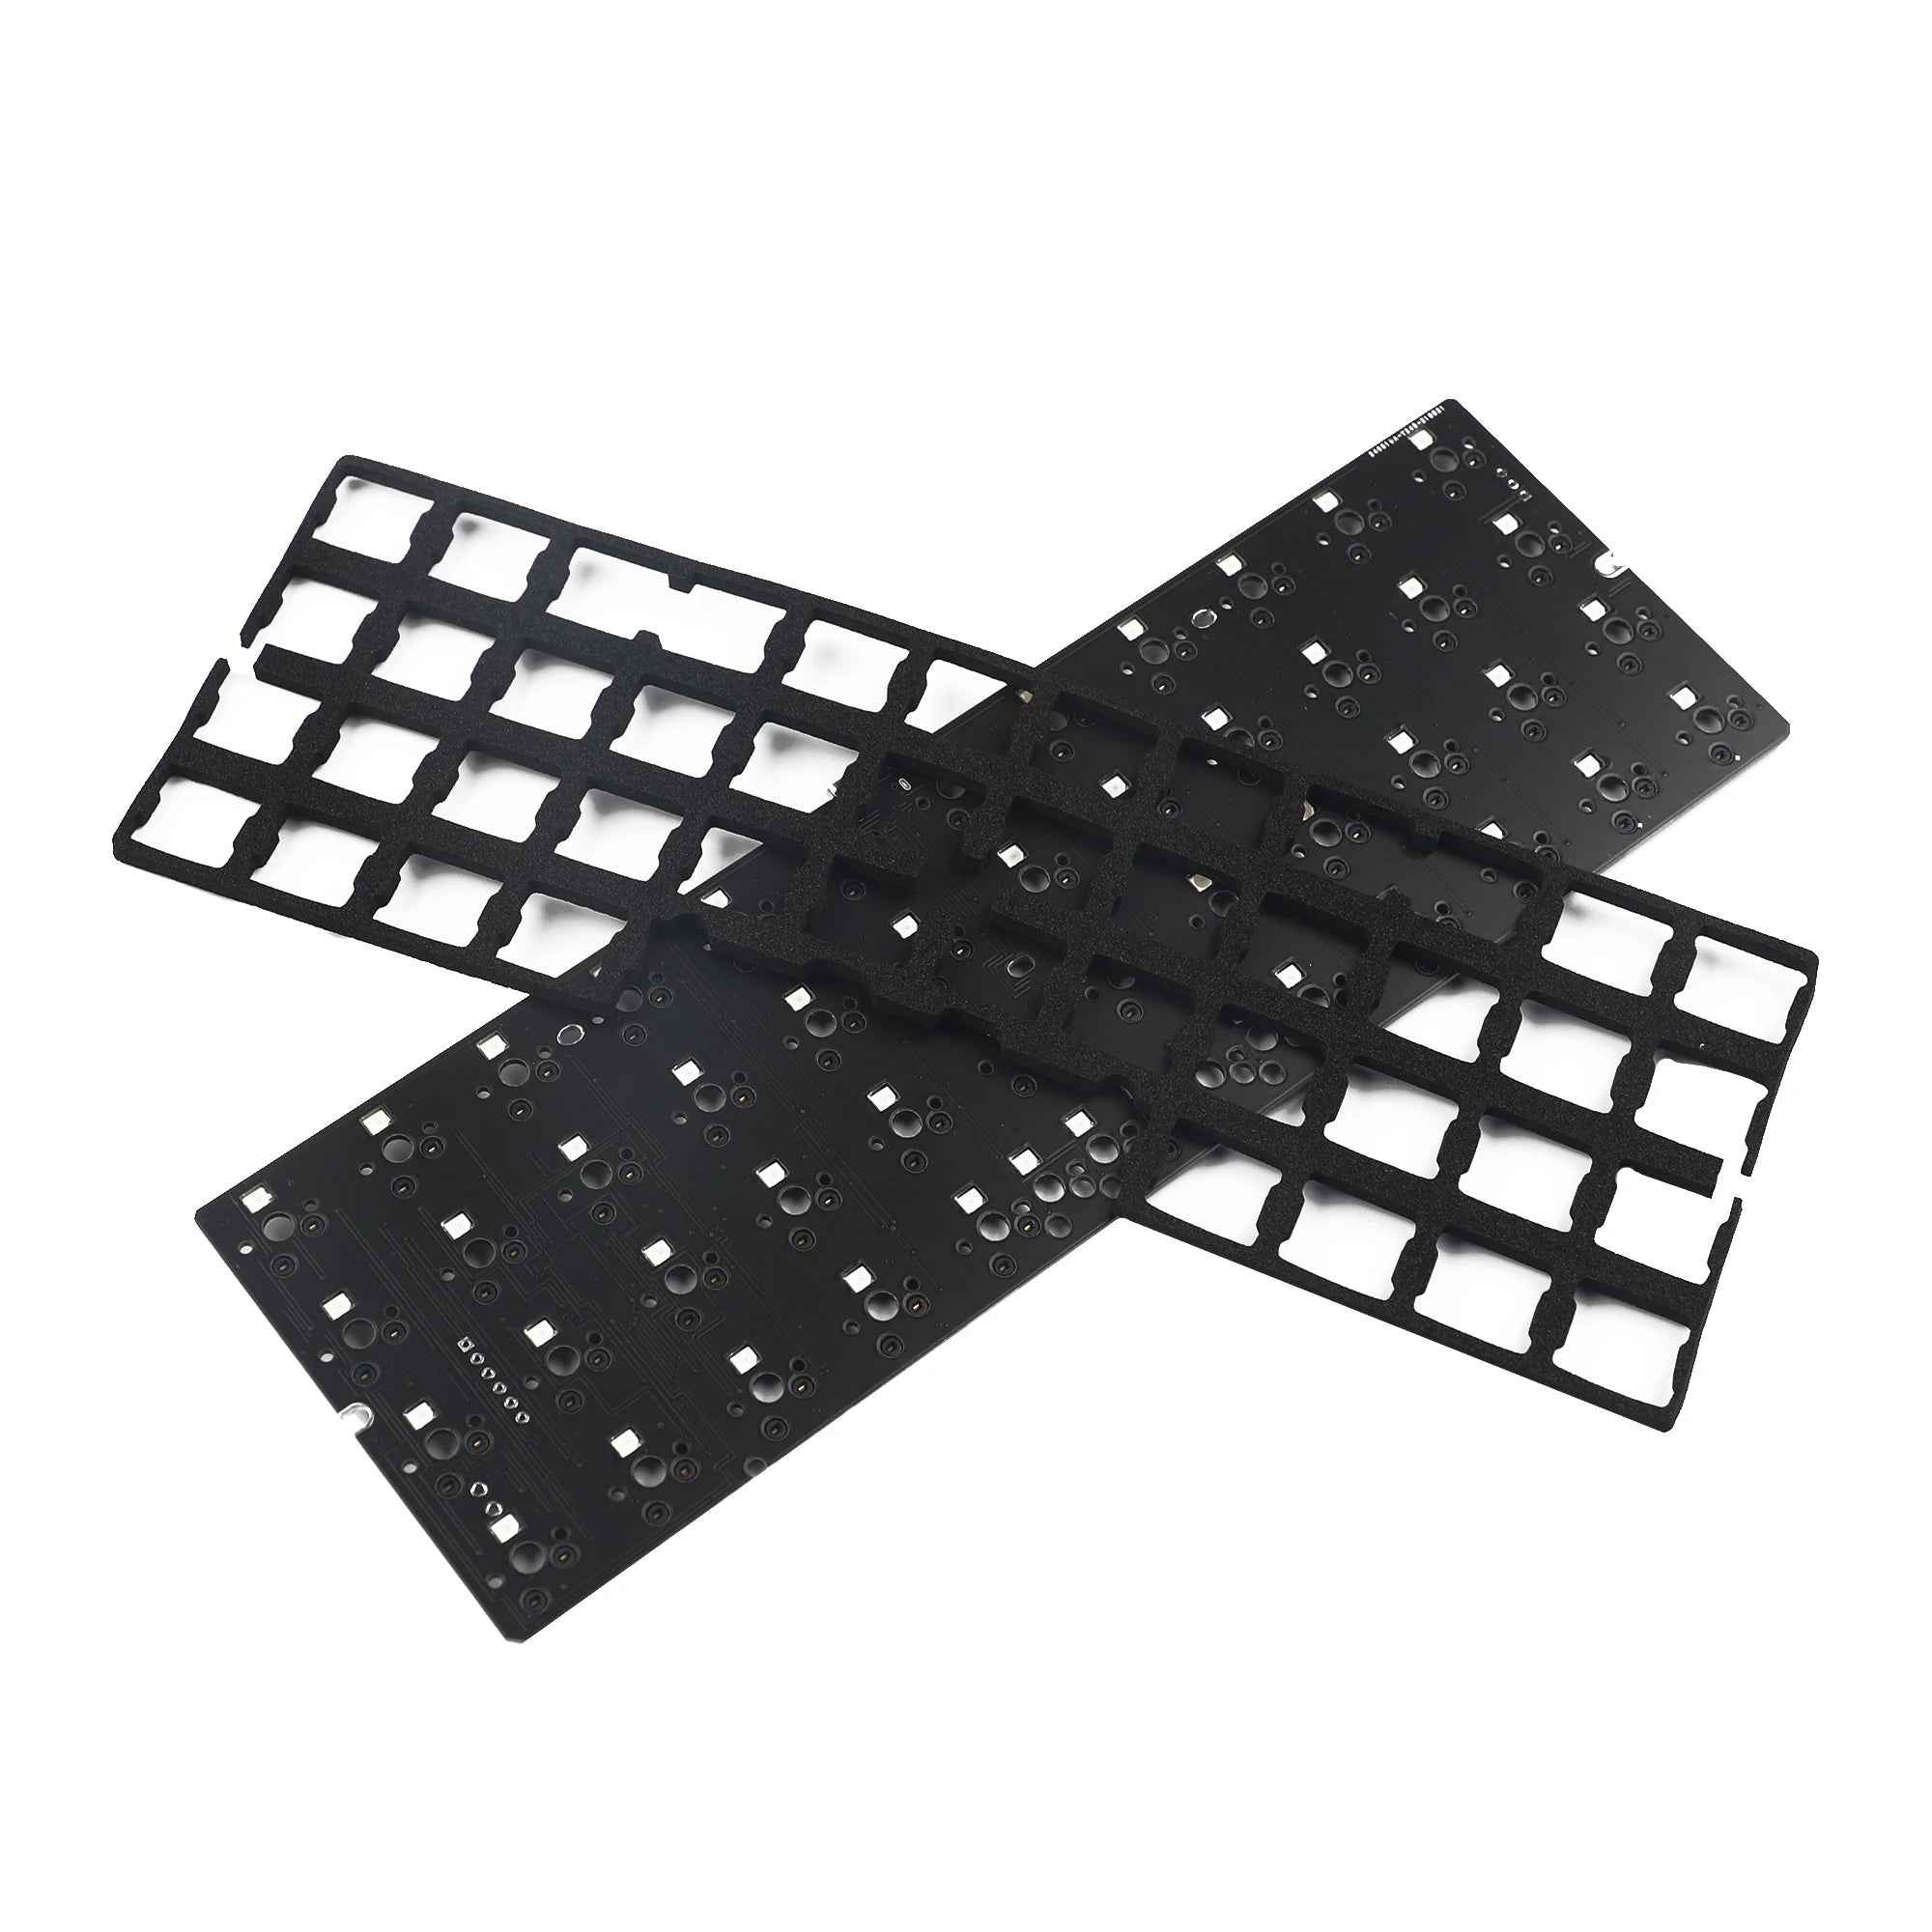 YMDK Air40 Keyboard Foam - PCB Mute Cotton